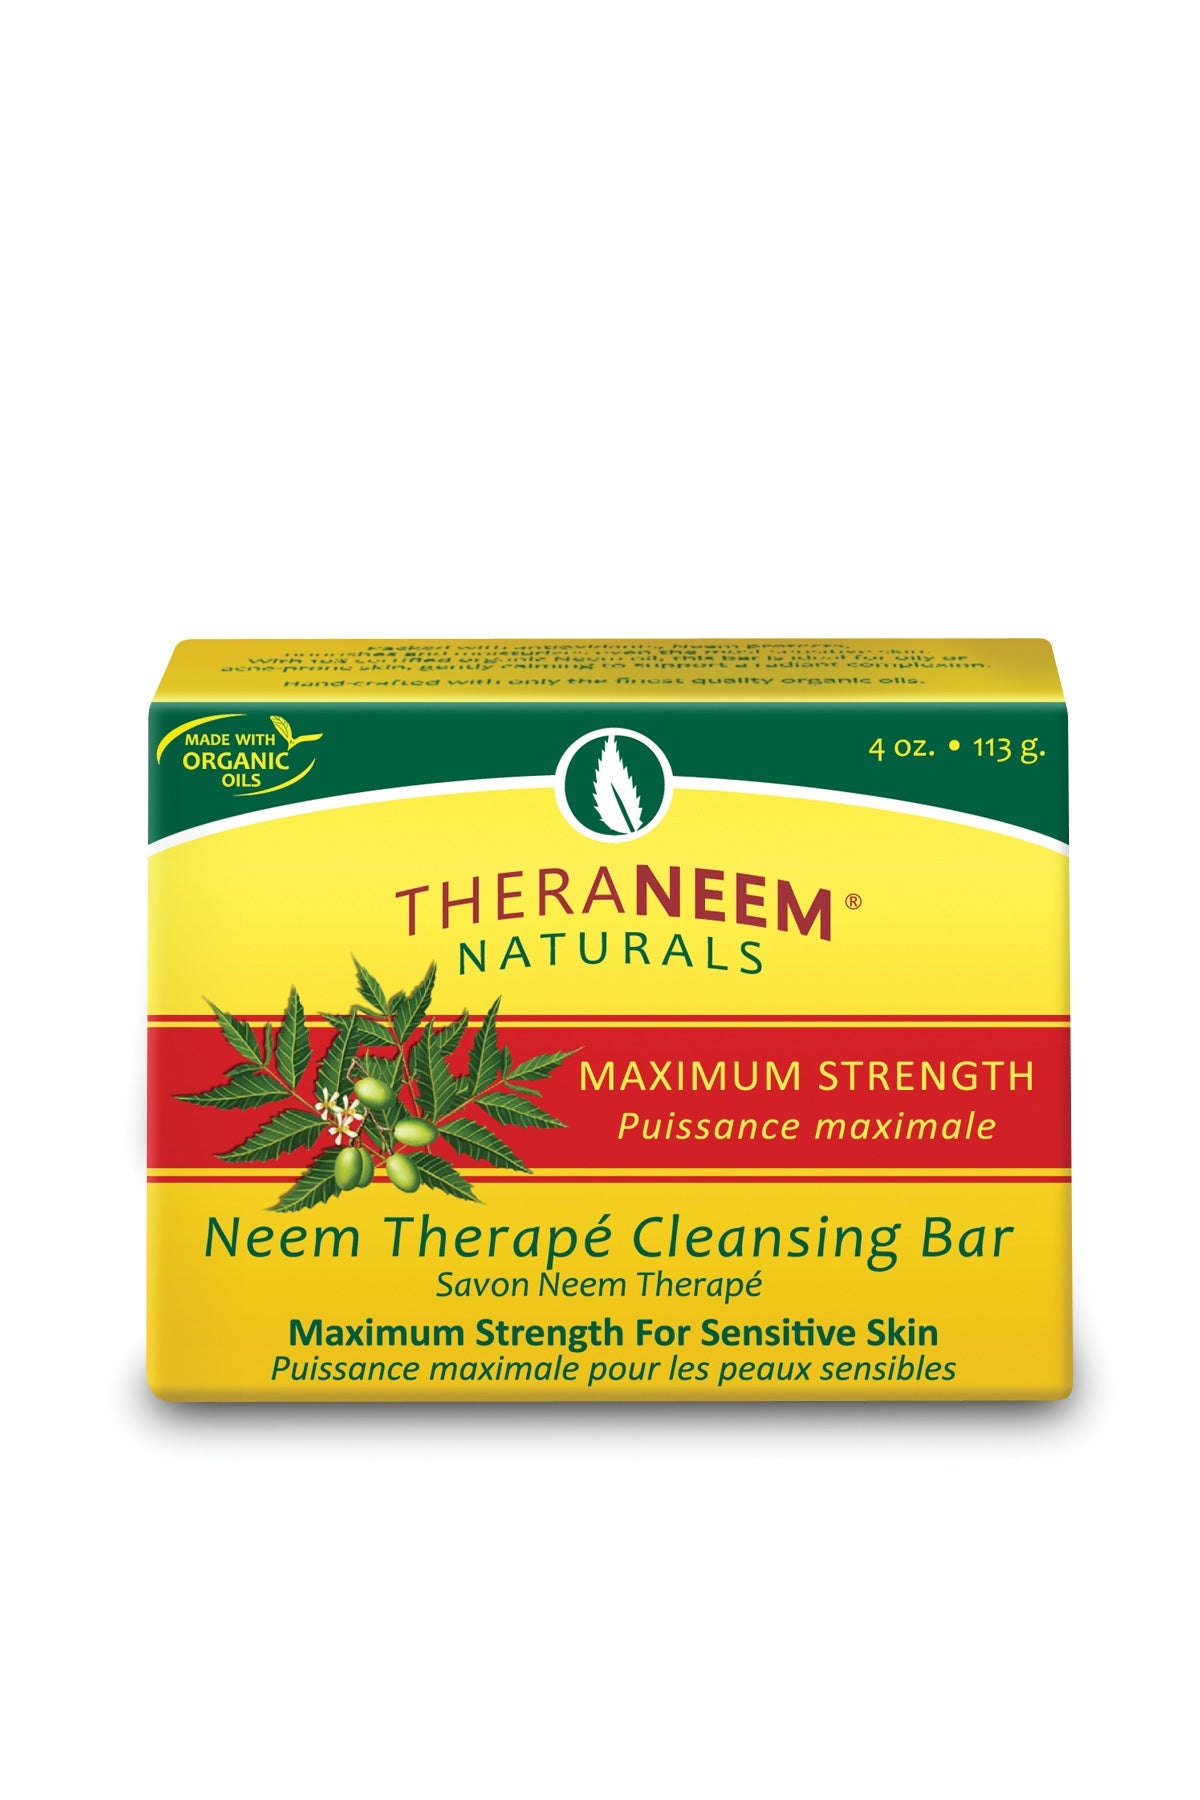 Theraneem Neem Therape Cleansing Bar 13g